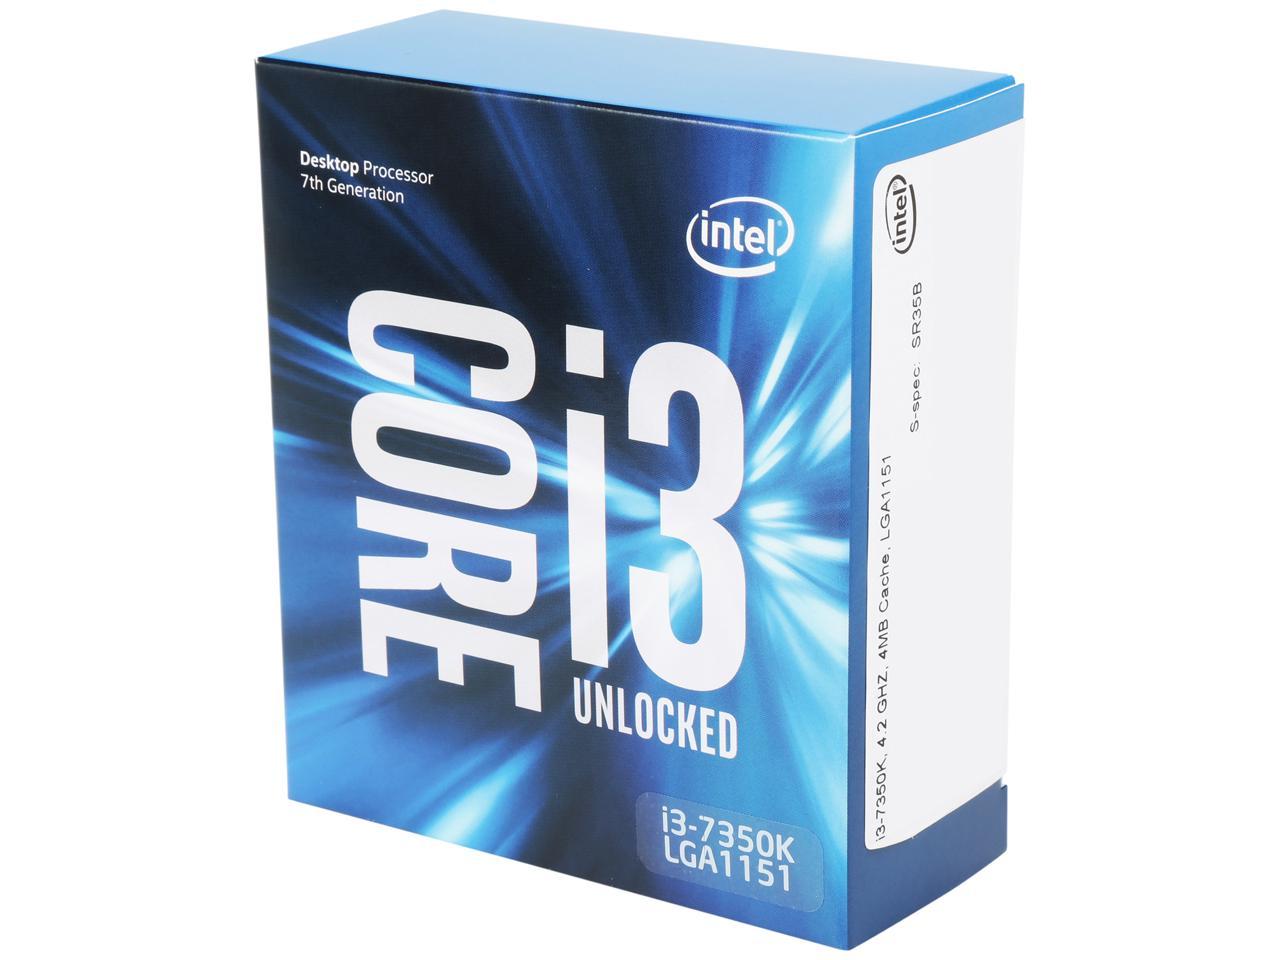 Intel Core i3-7350K Kaby Lake Dual-Core 4.2 GHz LGA 1151 60W BX80677I37350K Desktop Processor Intel HD Graphics 630